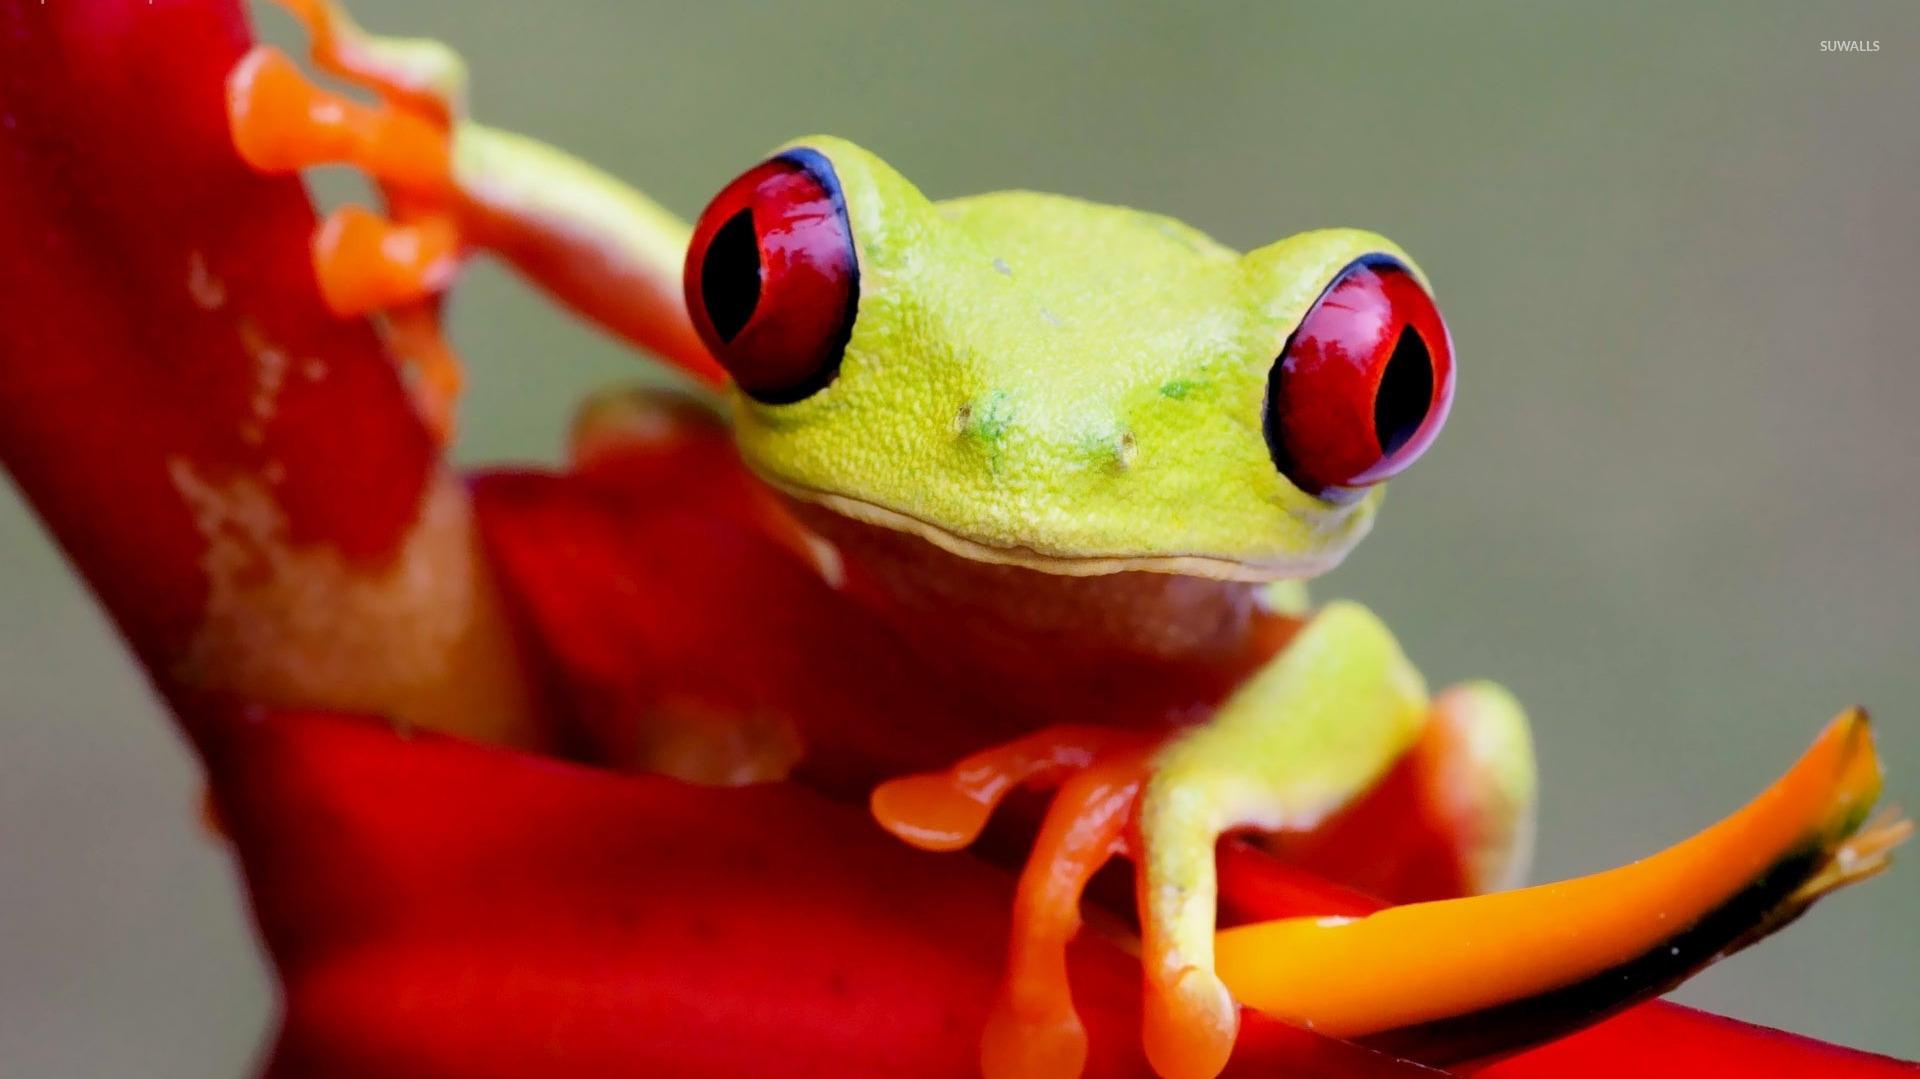 Free download Red eyed tree frog wallpaper Animal wallpapers 33700